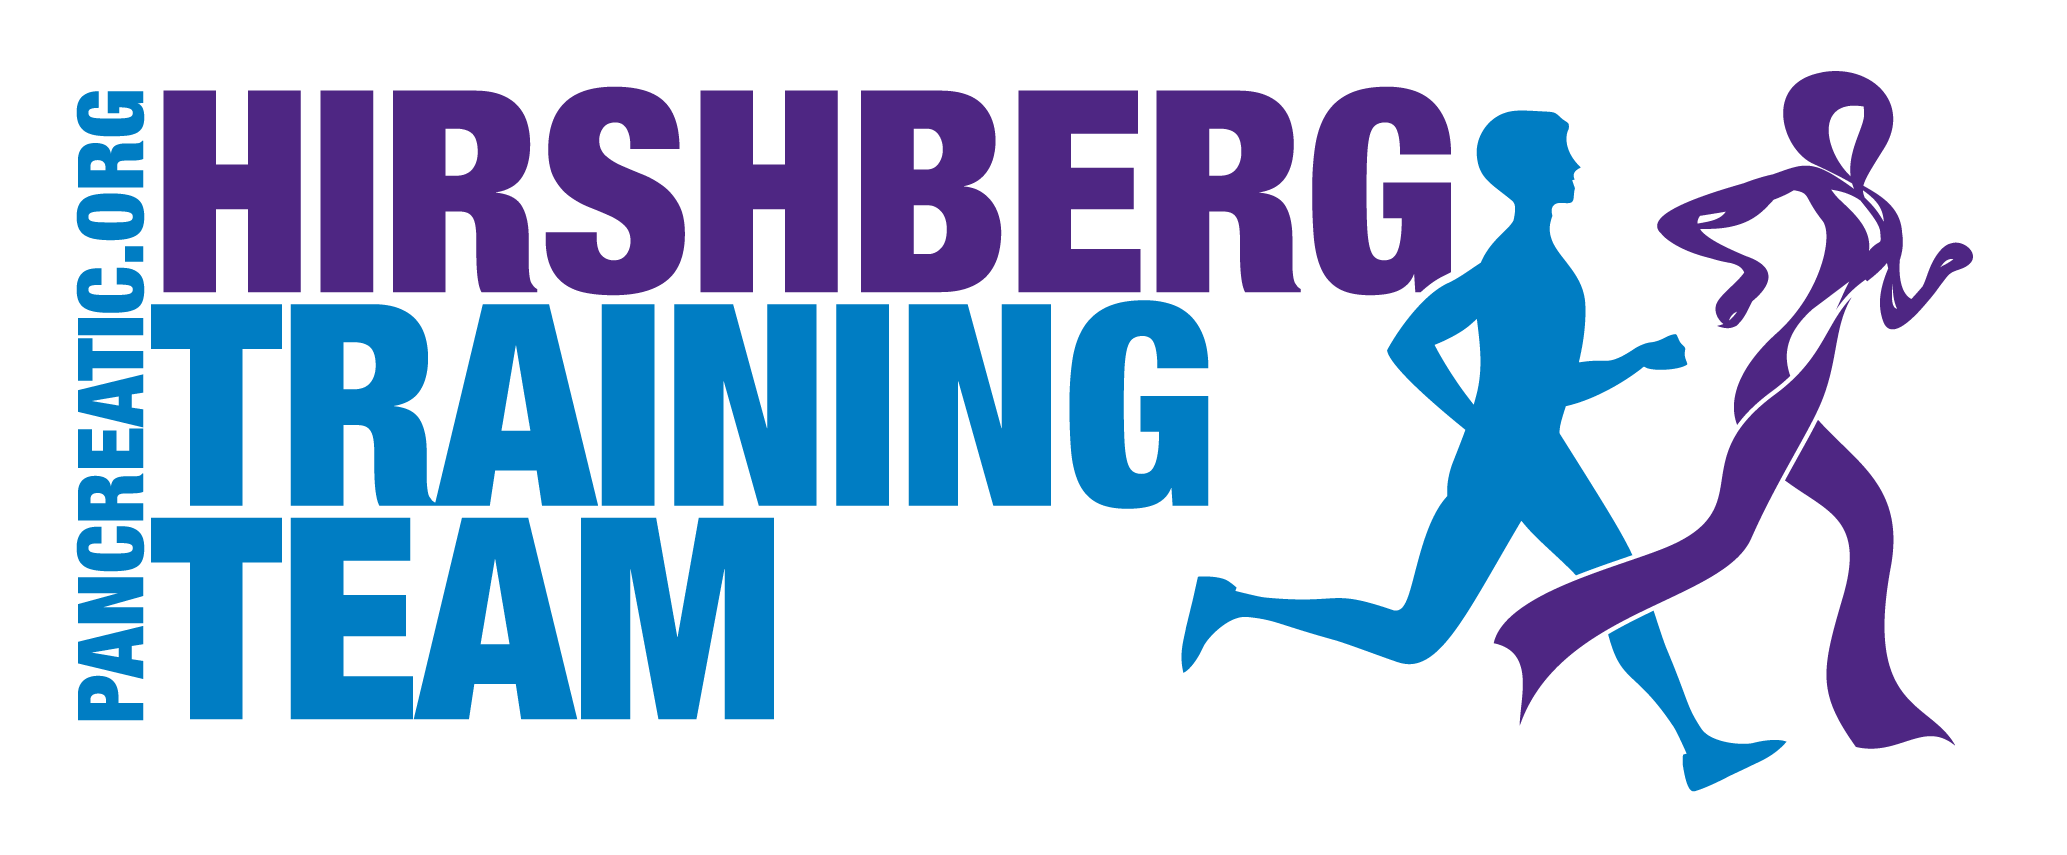 Hirshberg Training Team